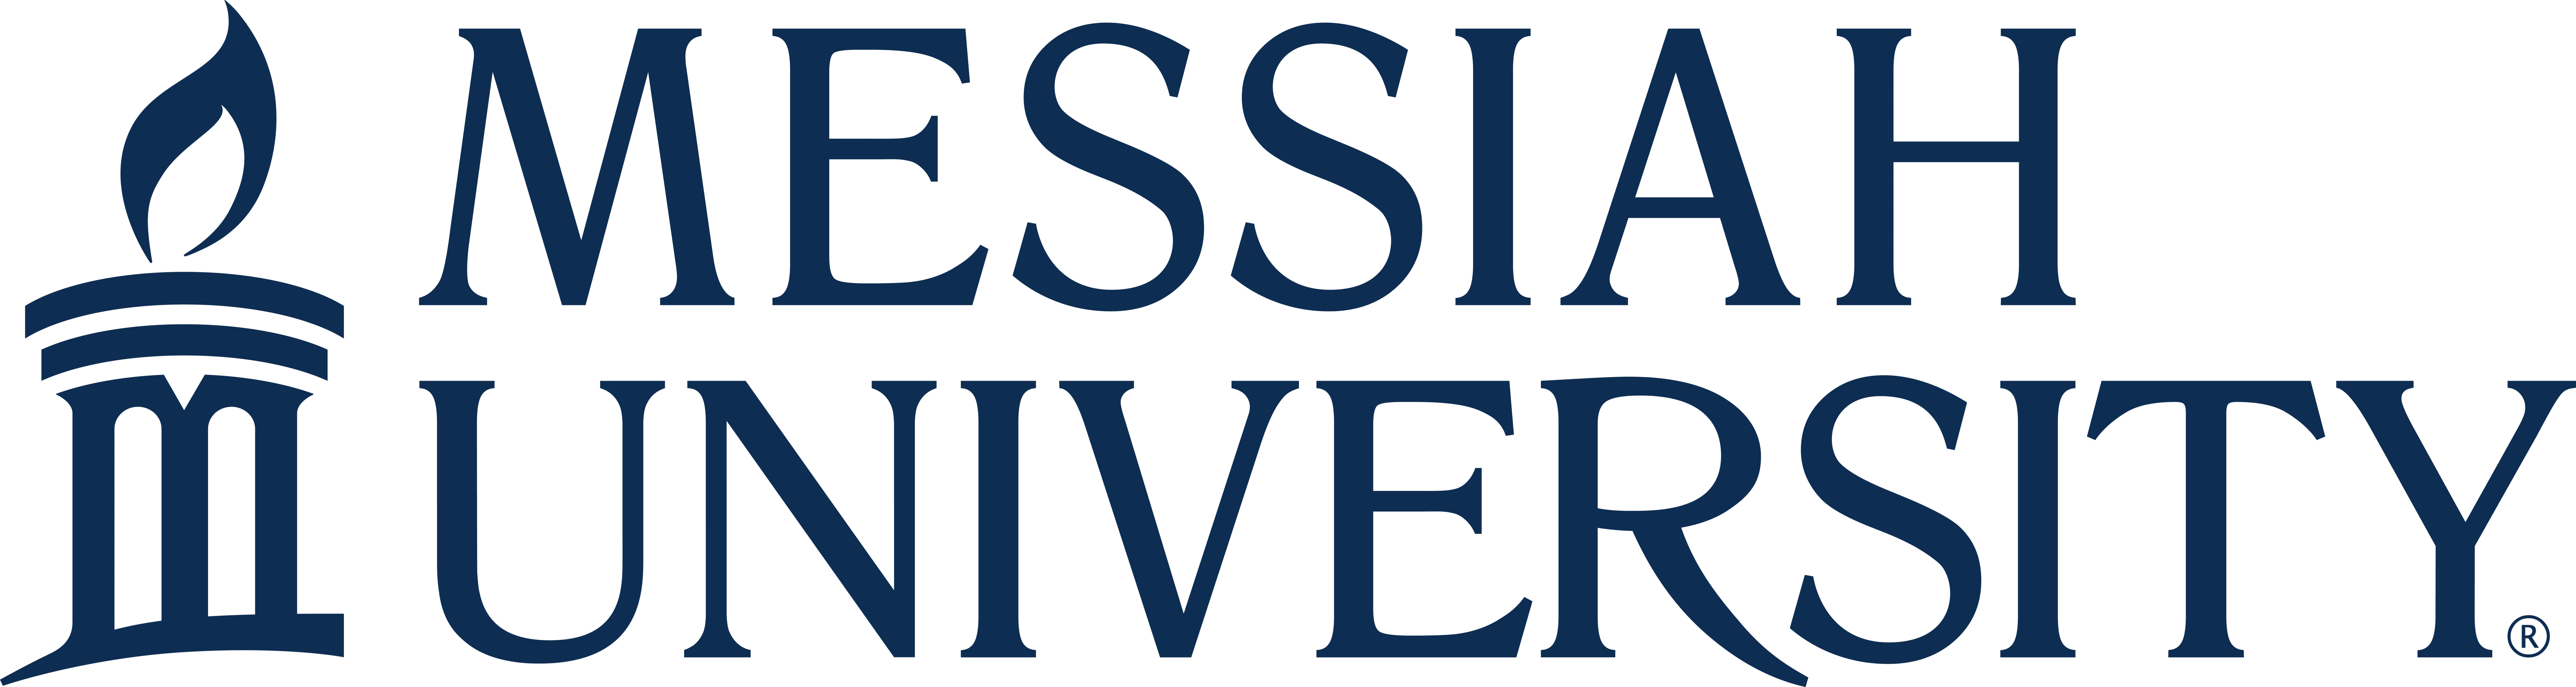 Messiah College is now Messiah University logo